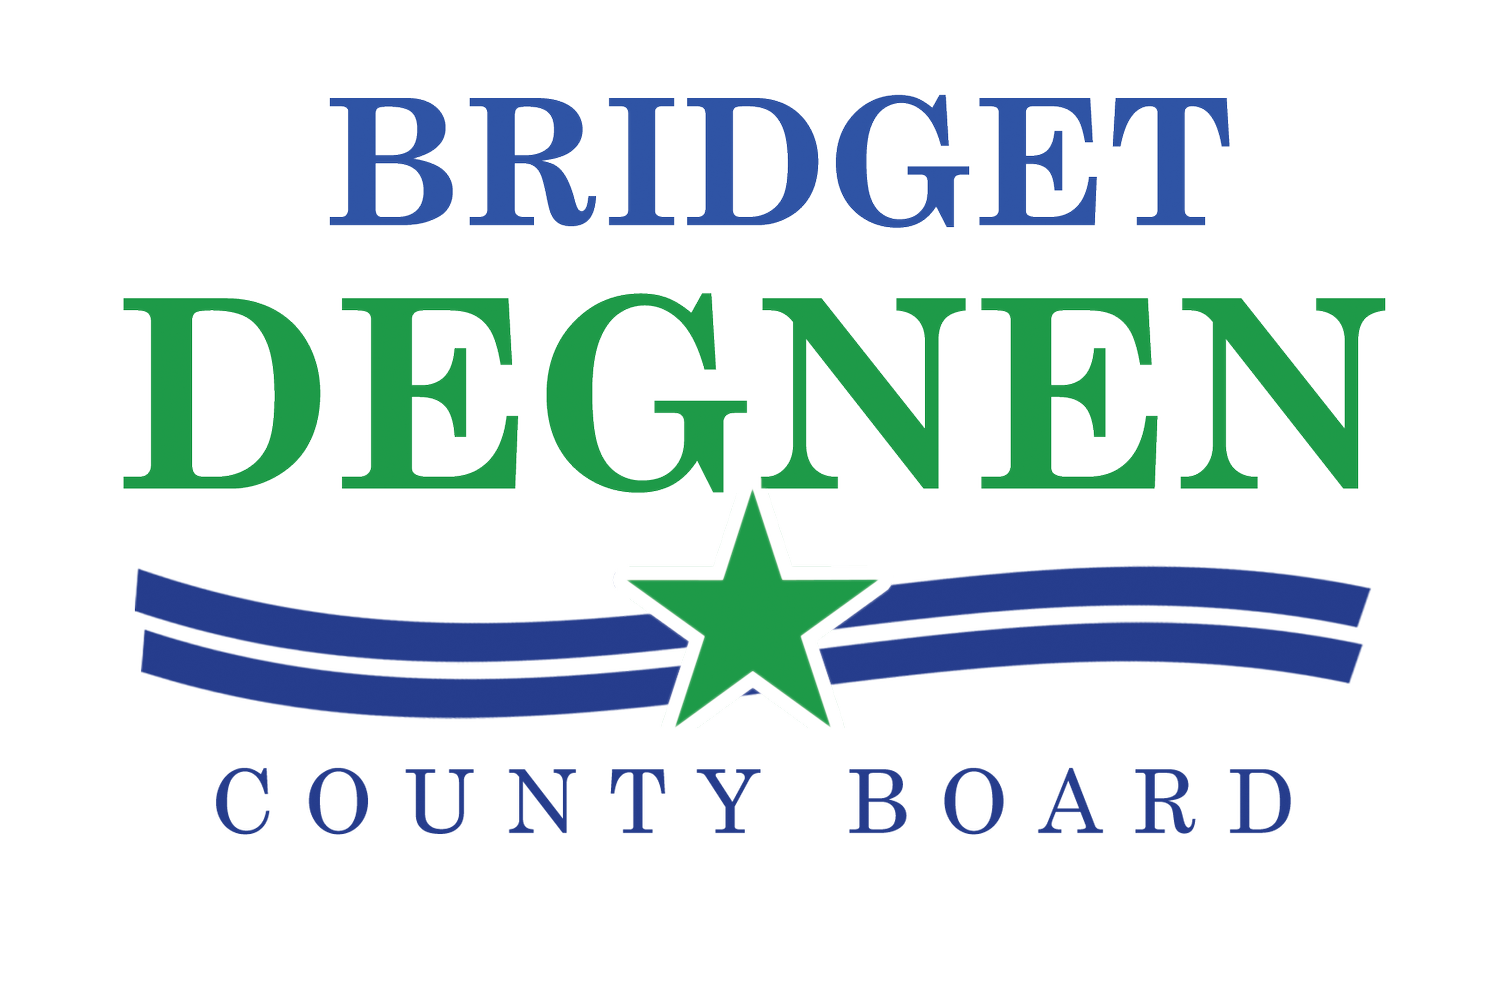 Bridget Degnen for County Board